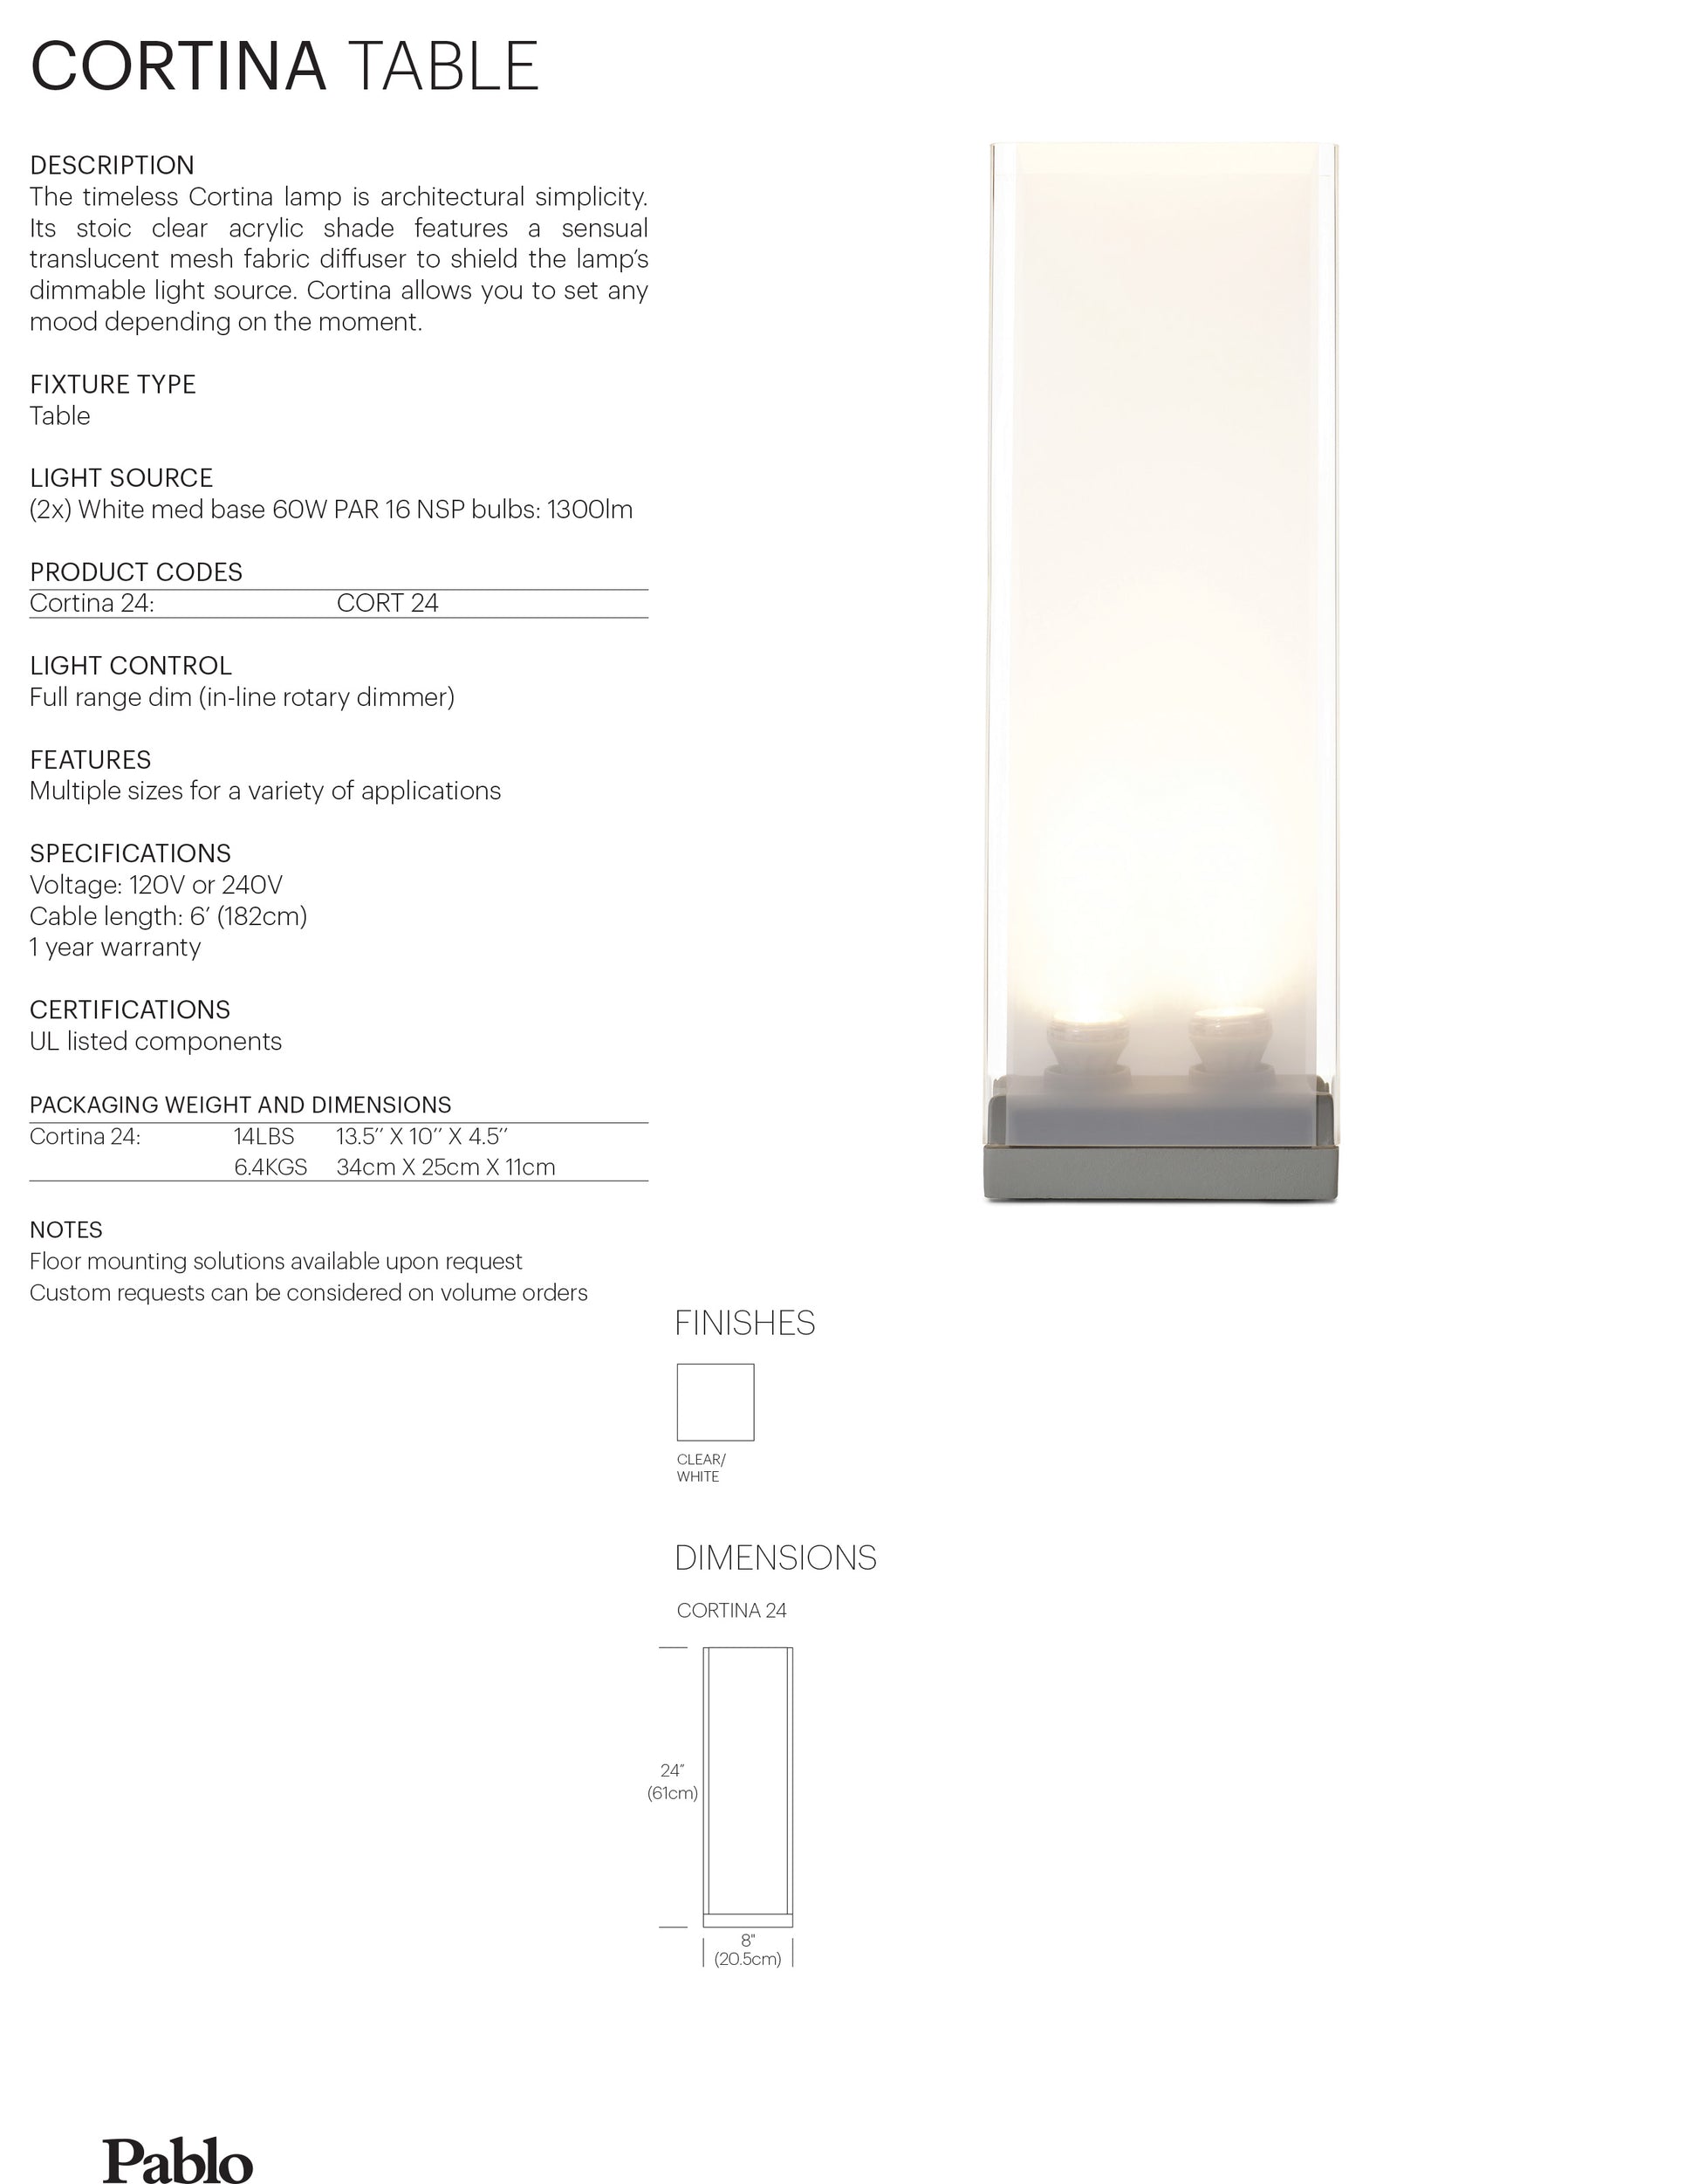 Pablo Designs Cortina Table Lamp - LoftModern